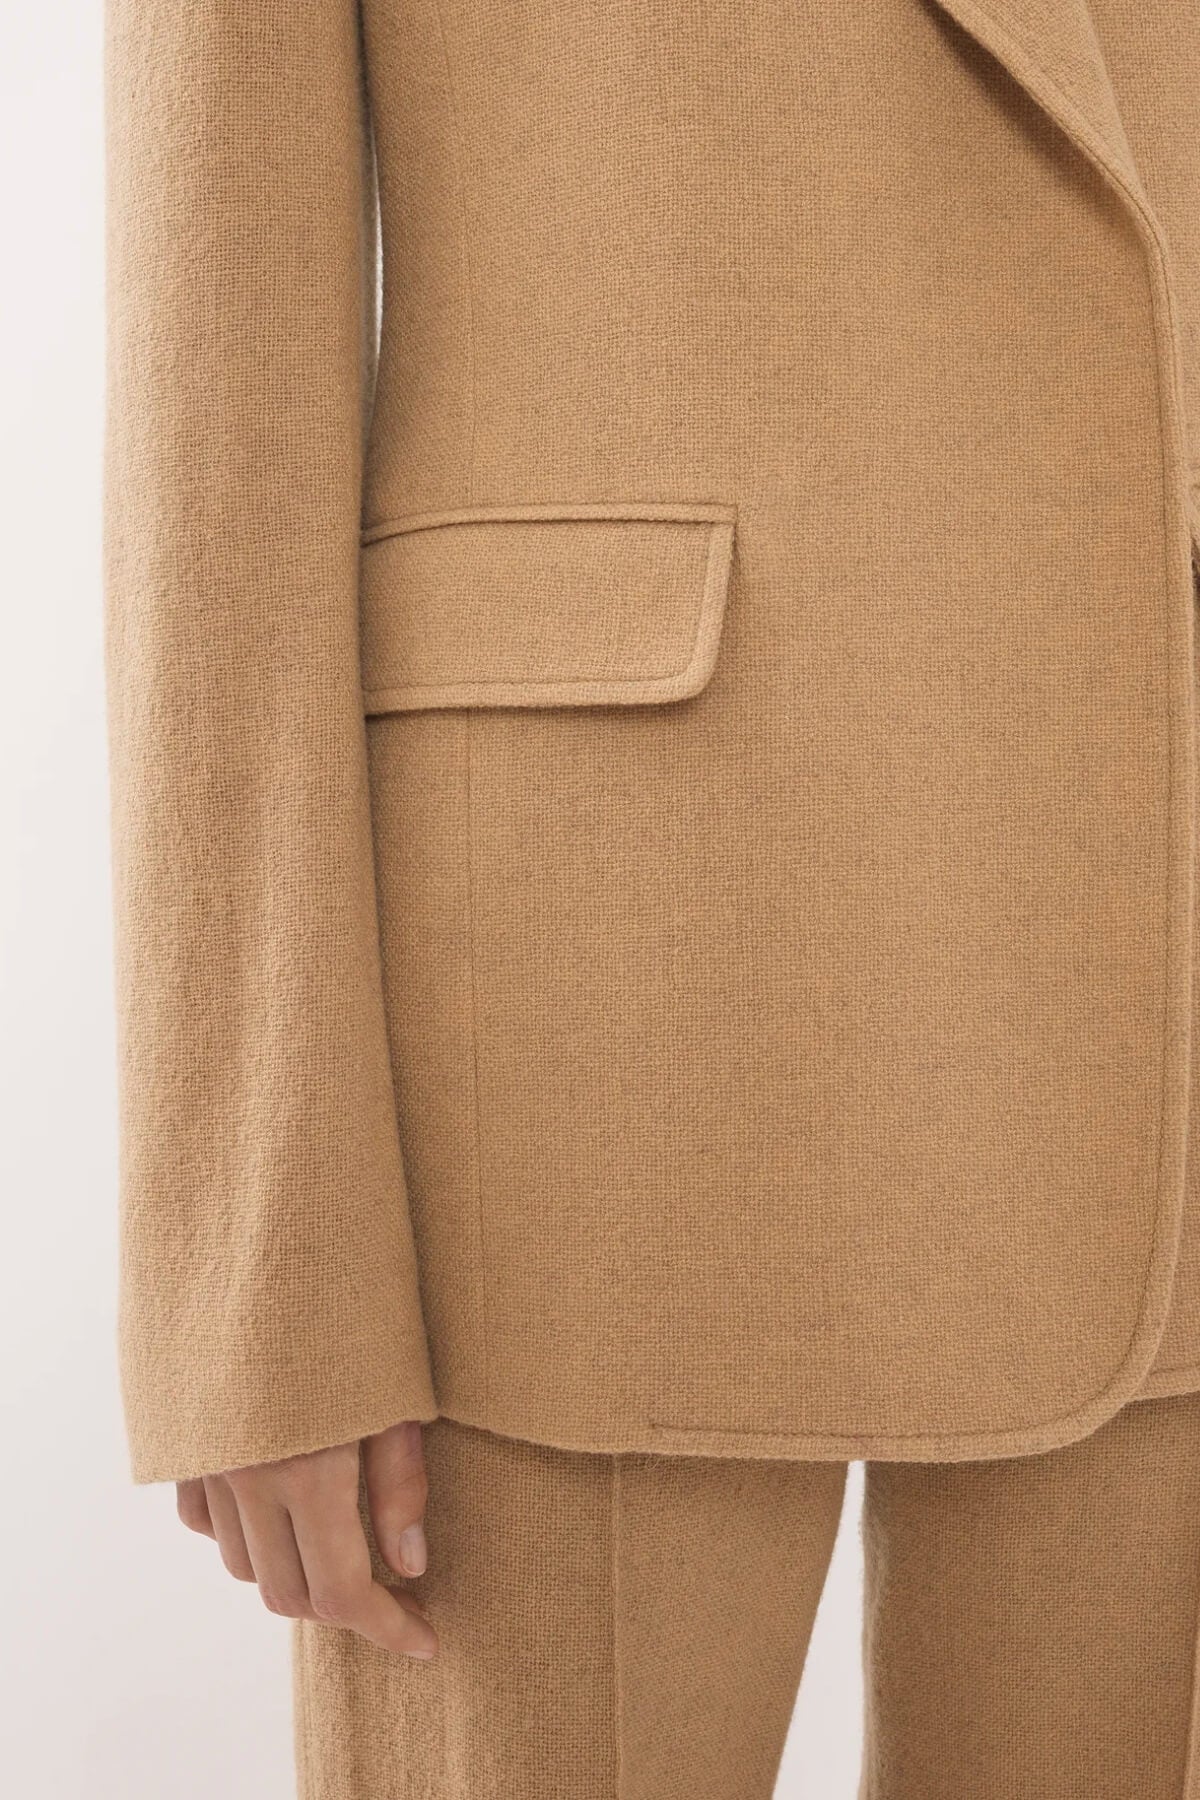 Chloé Buttonless Tailored Blazer - Worn Brown